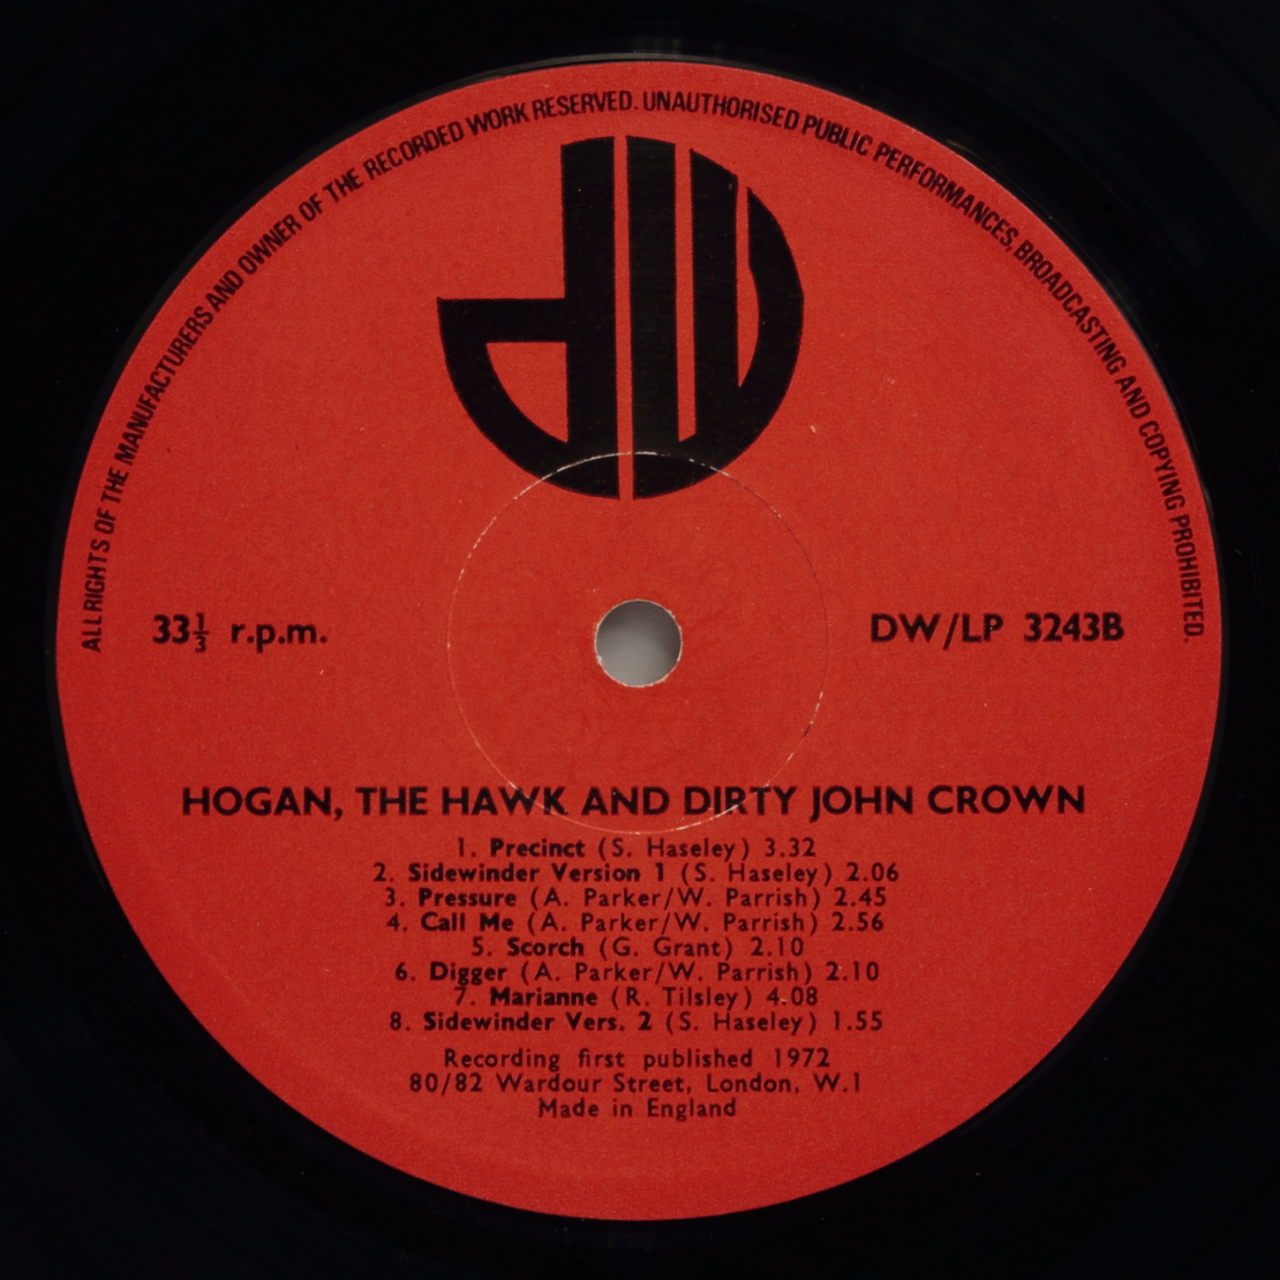 Hogan, The Hawk and Dirty John Crown